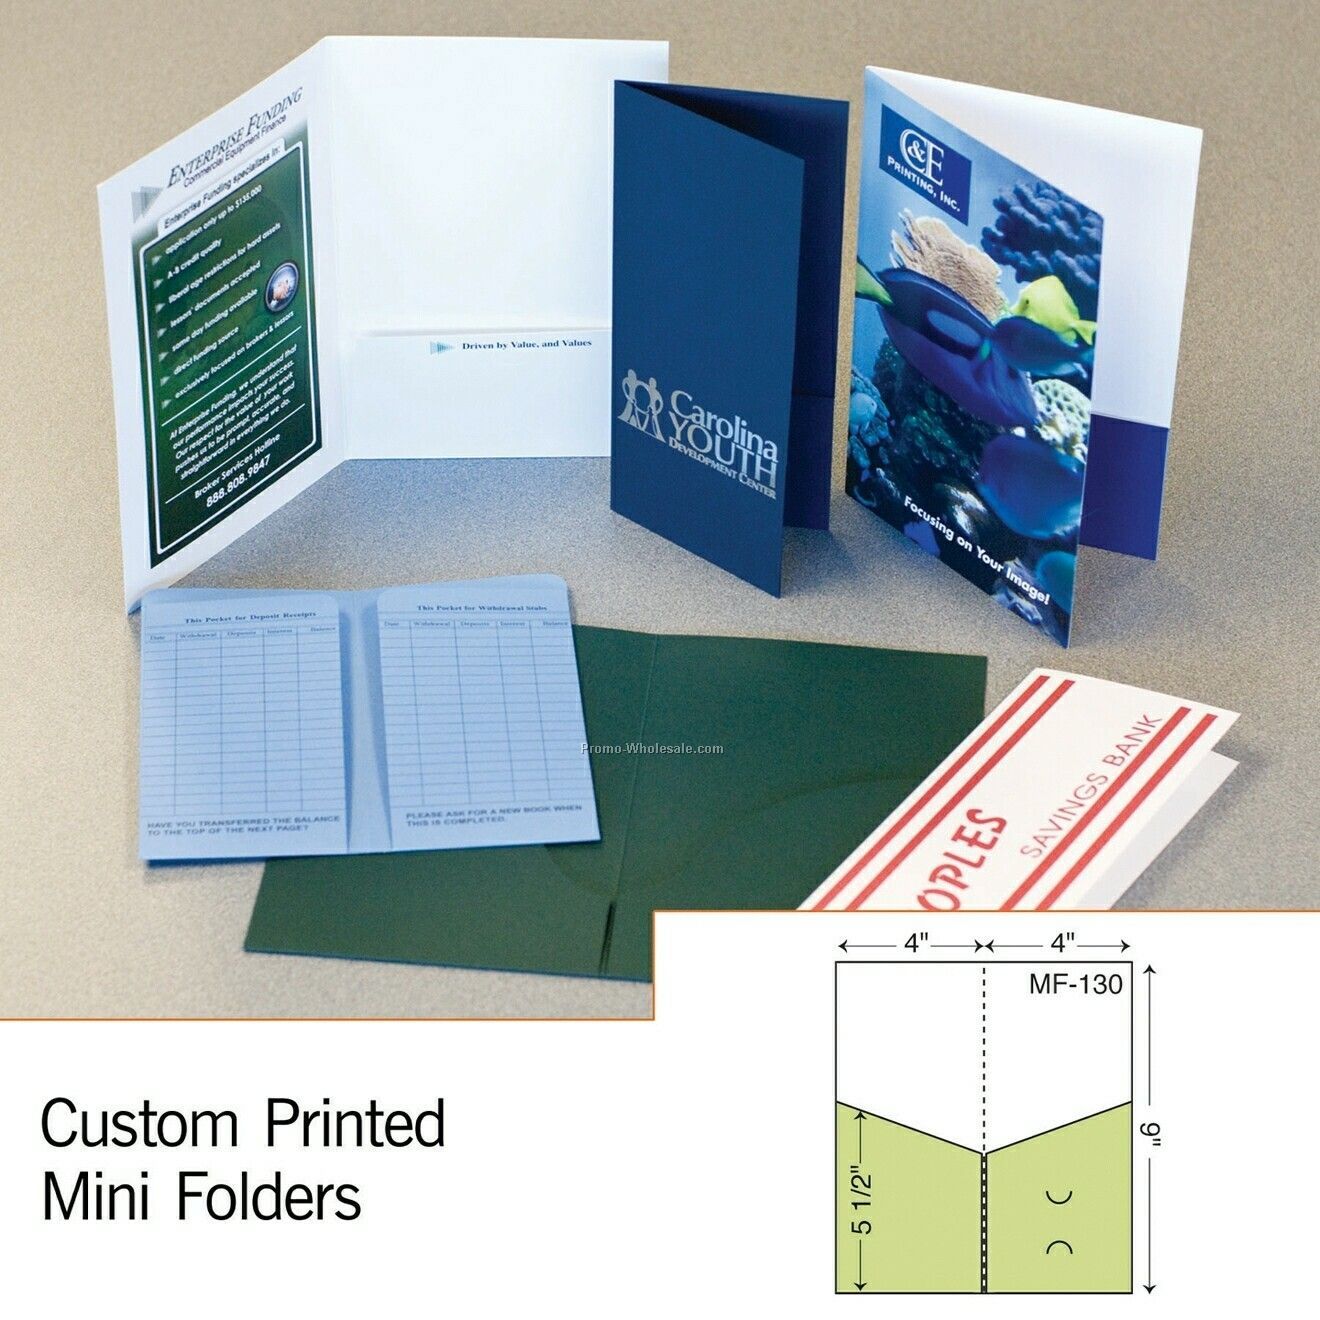 4"x9" Mini Folder W/ Left Pocket (4 Color Process)